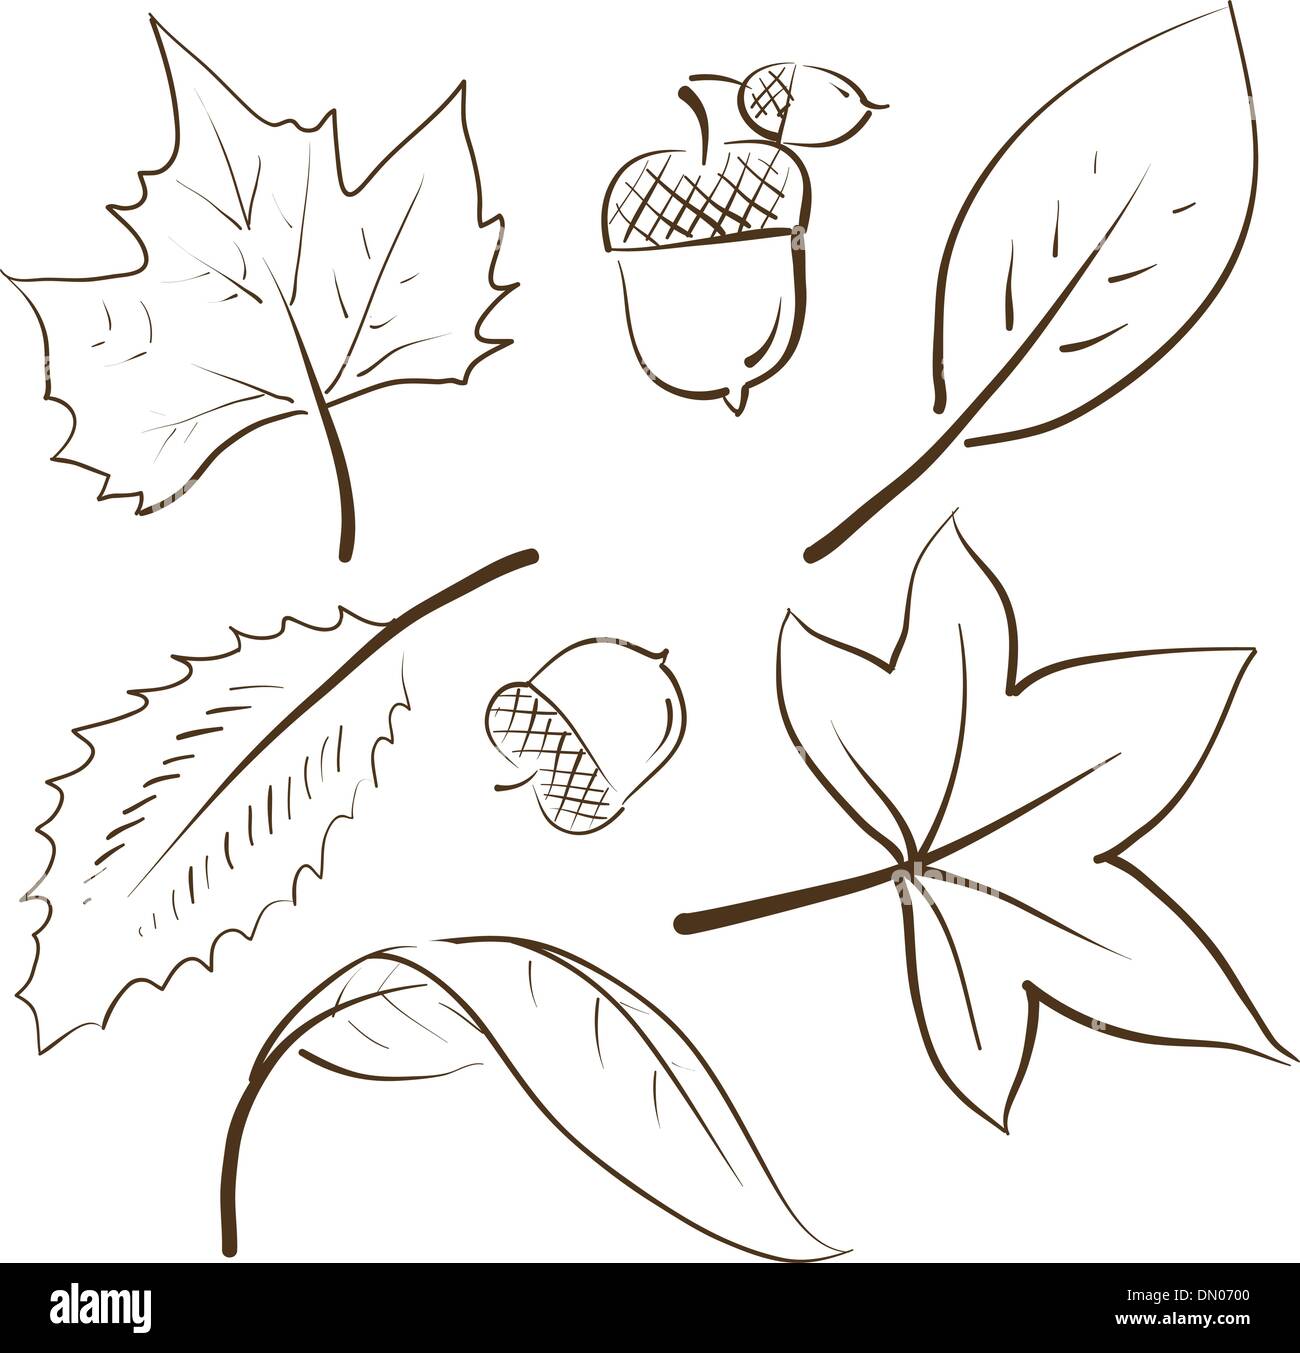 218600 Autumn Drawings Illustrations RoyaltyFree Vector Graphics  Clip  Art  iStock